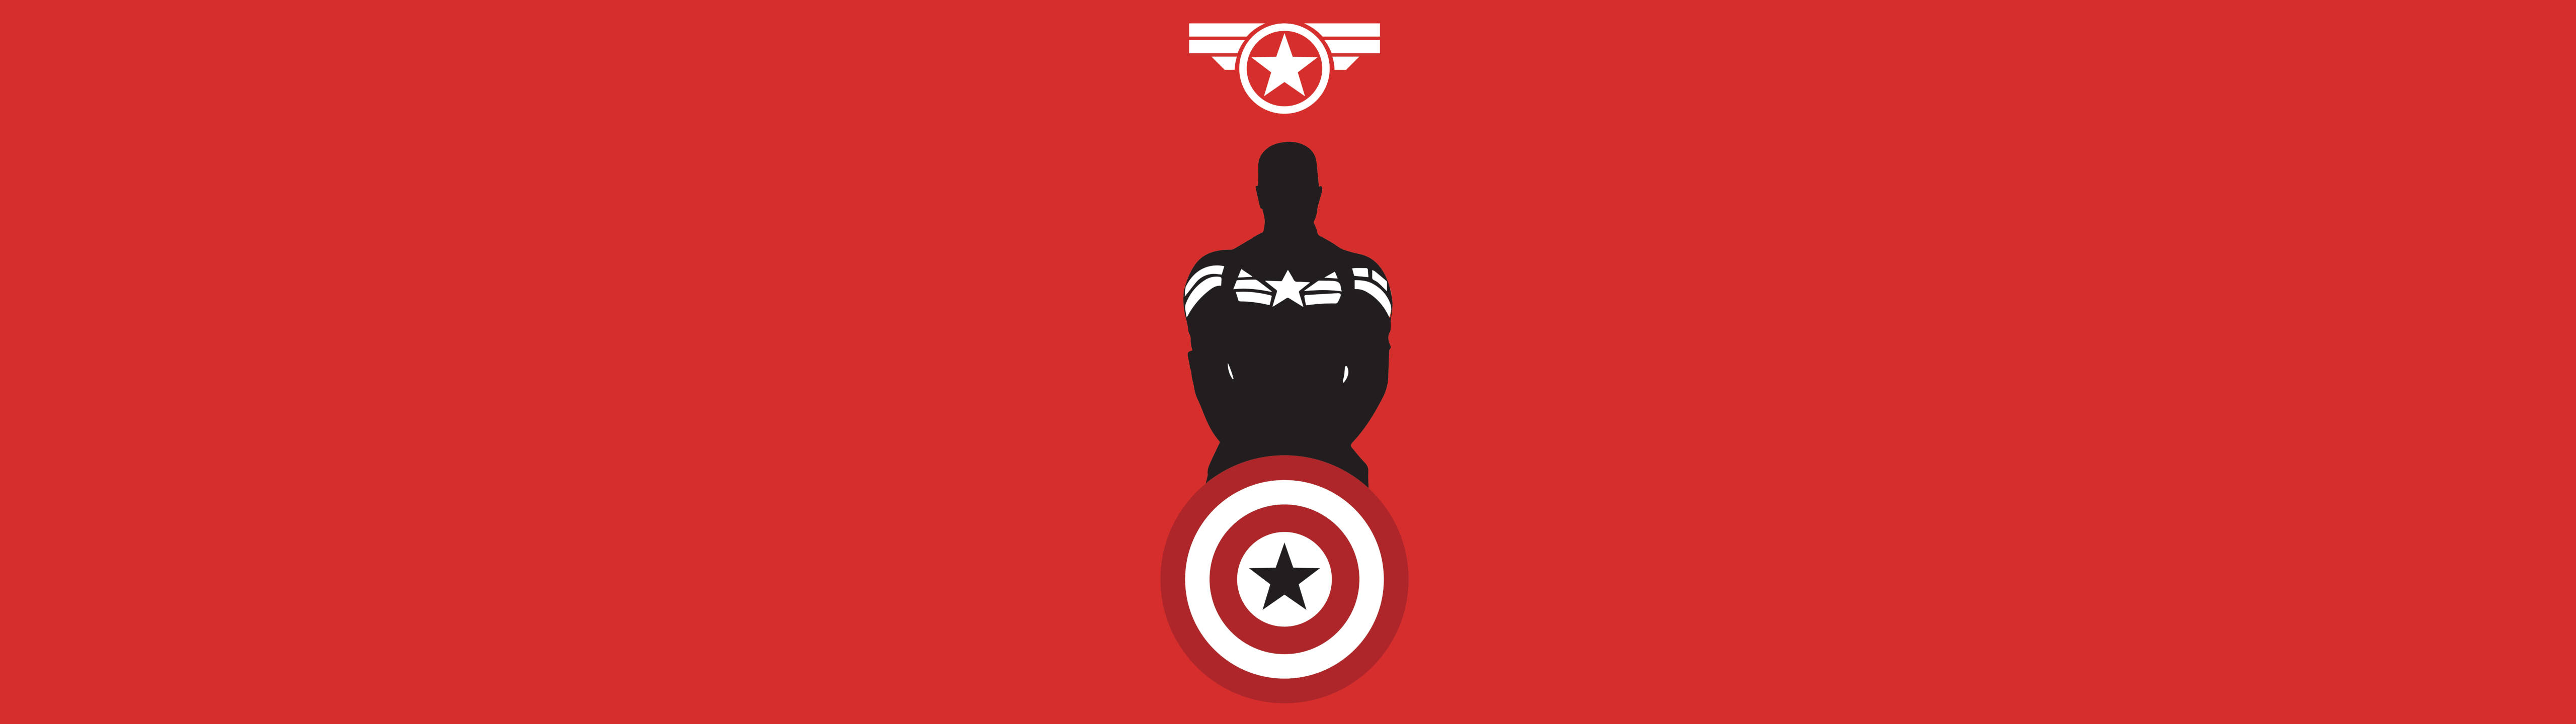 Marvel Hero Captain America 5120 X 1440 Background